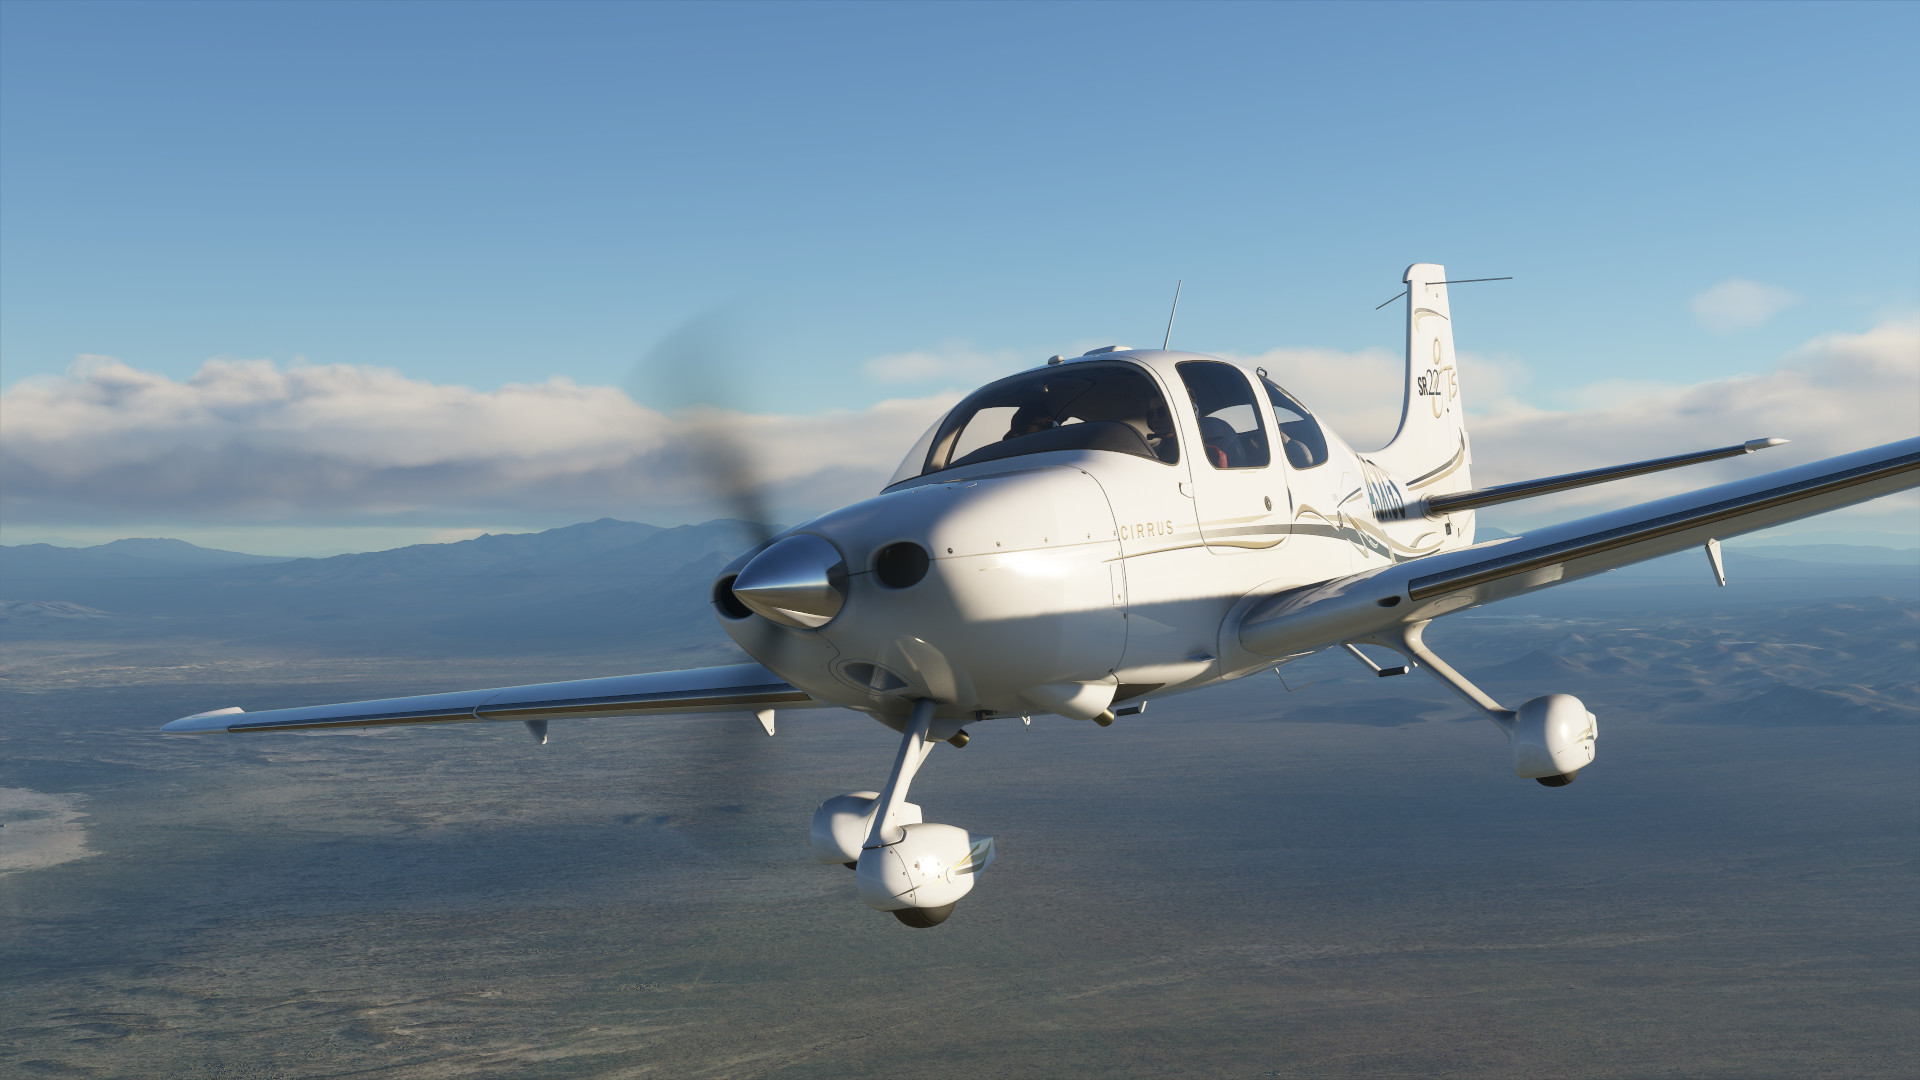 airplane flight simulator 2019 tutorial